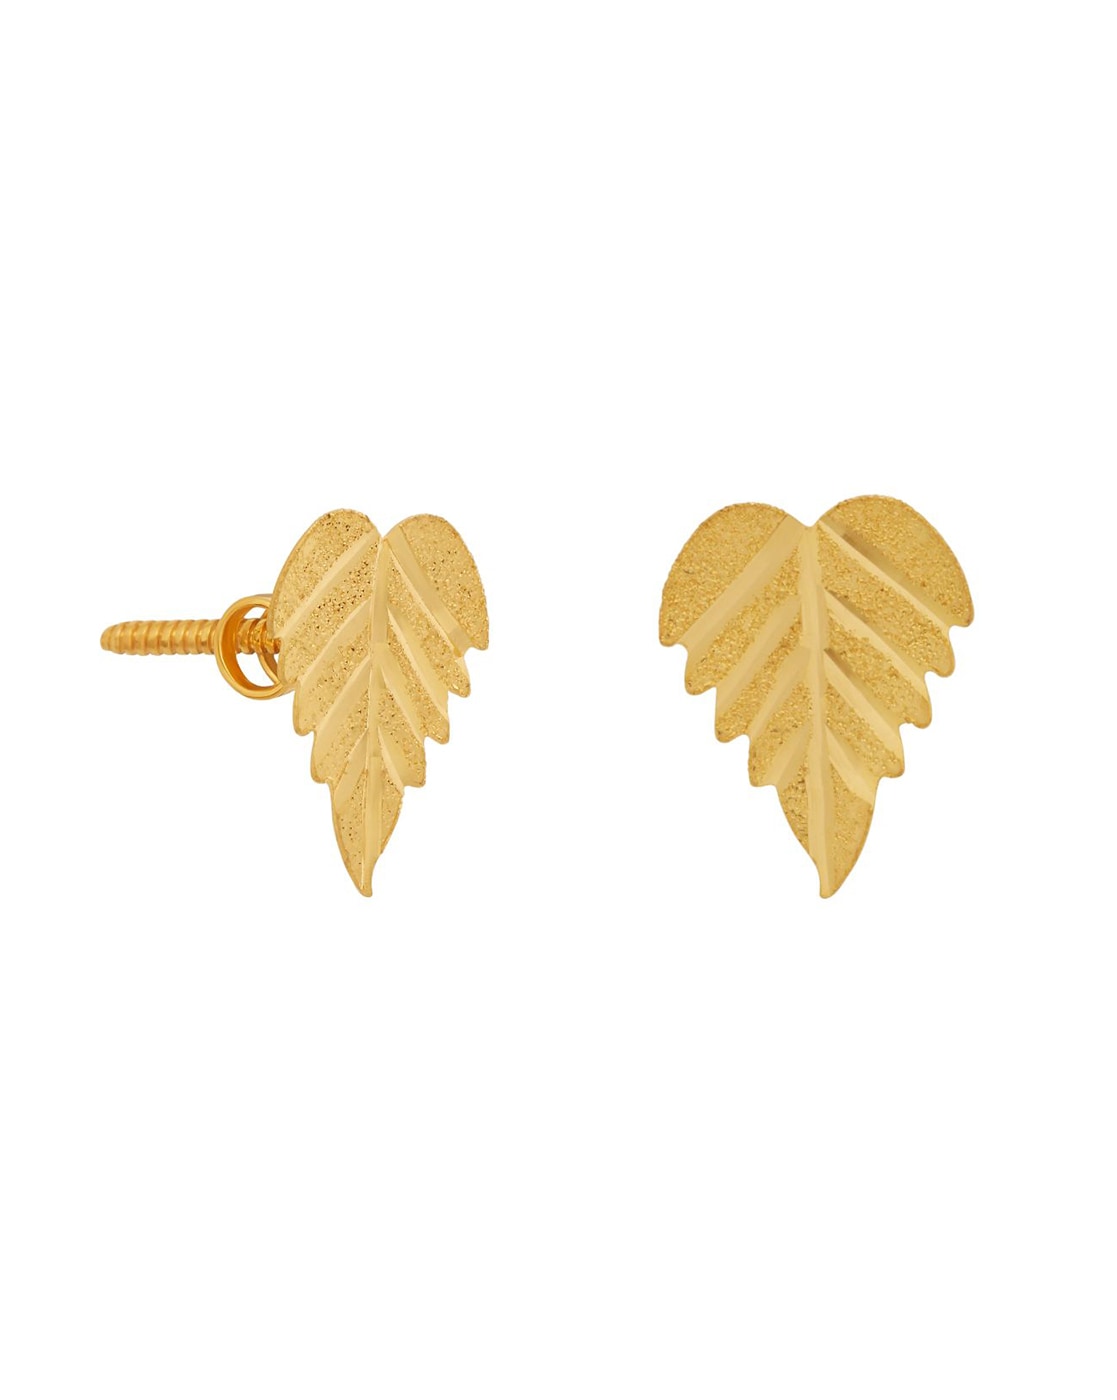 Share 125+ gold leaf stud earrings best